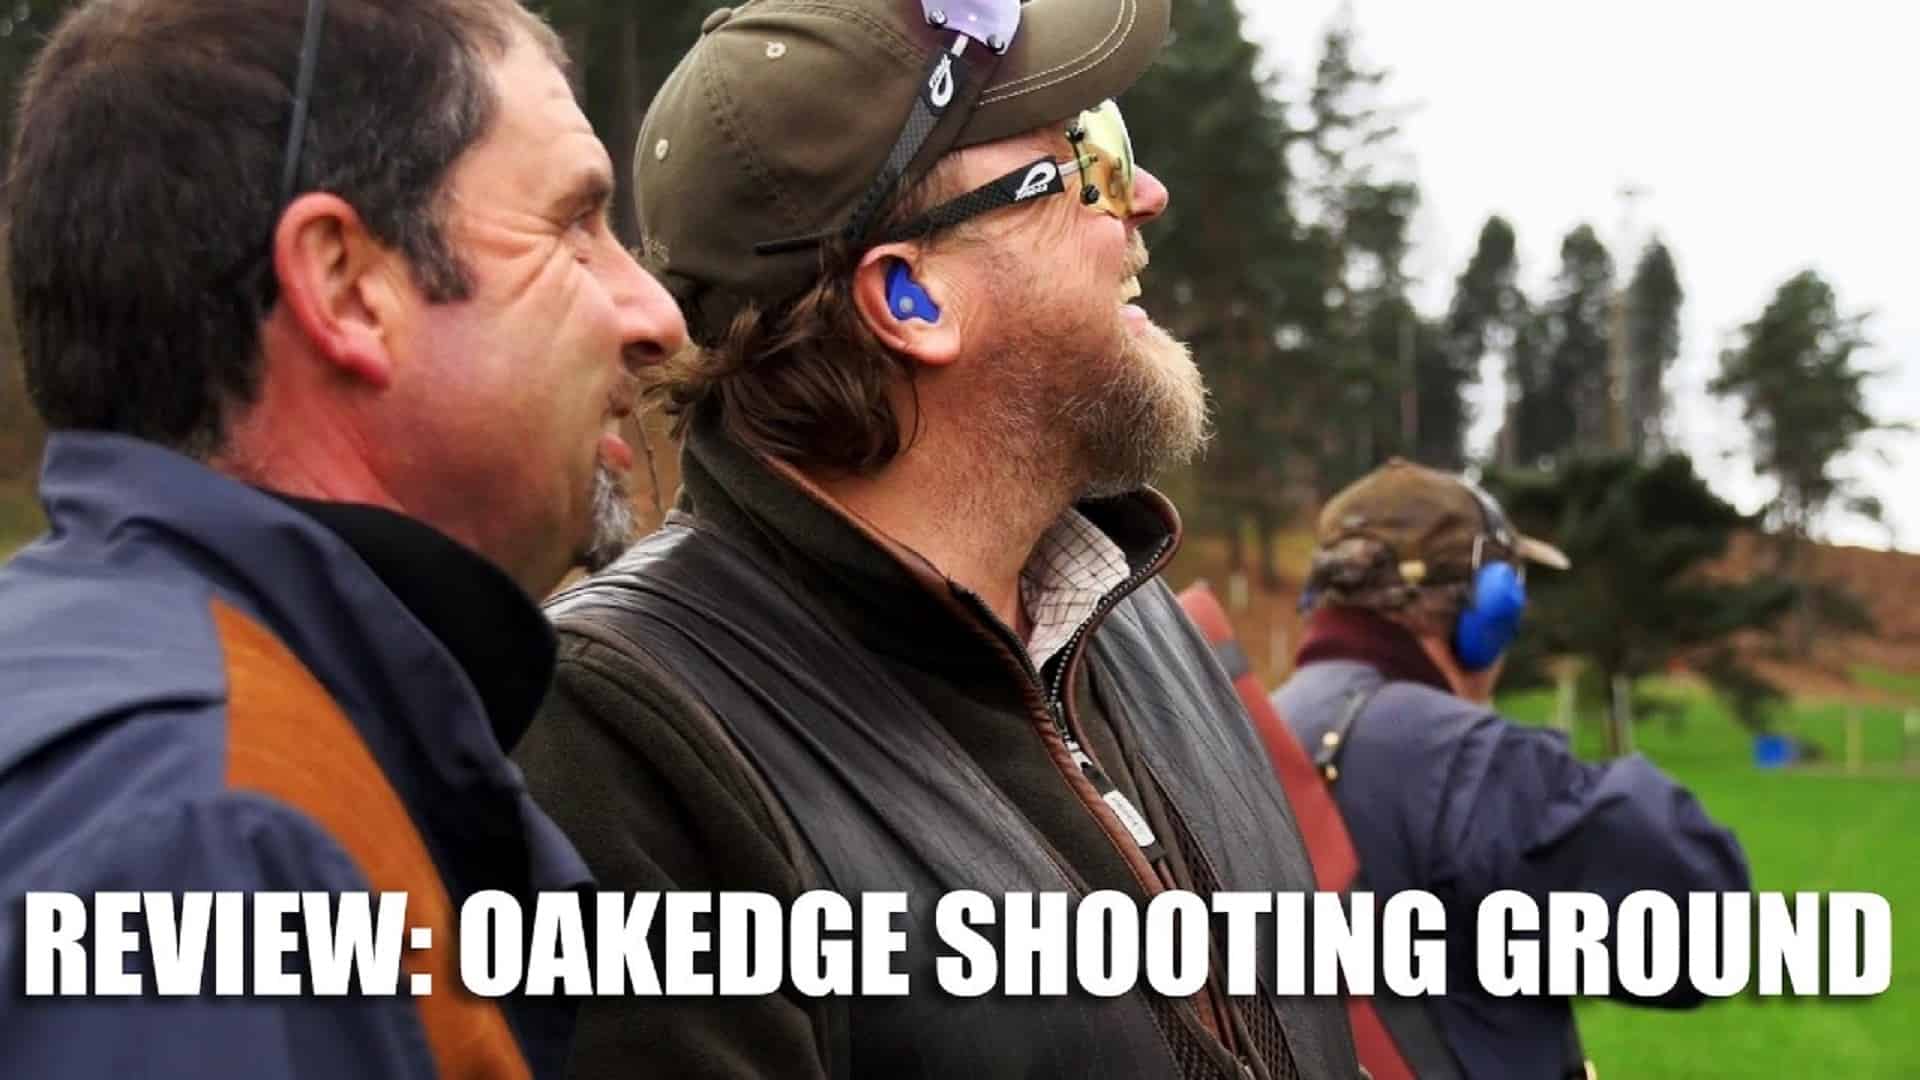 Oakedge Shooting Ground in UK